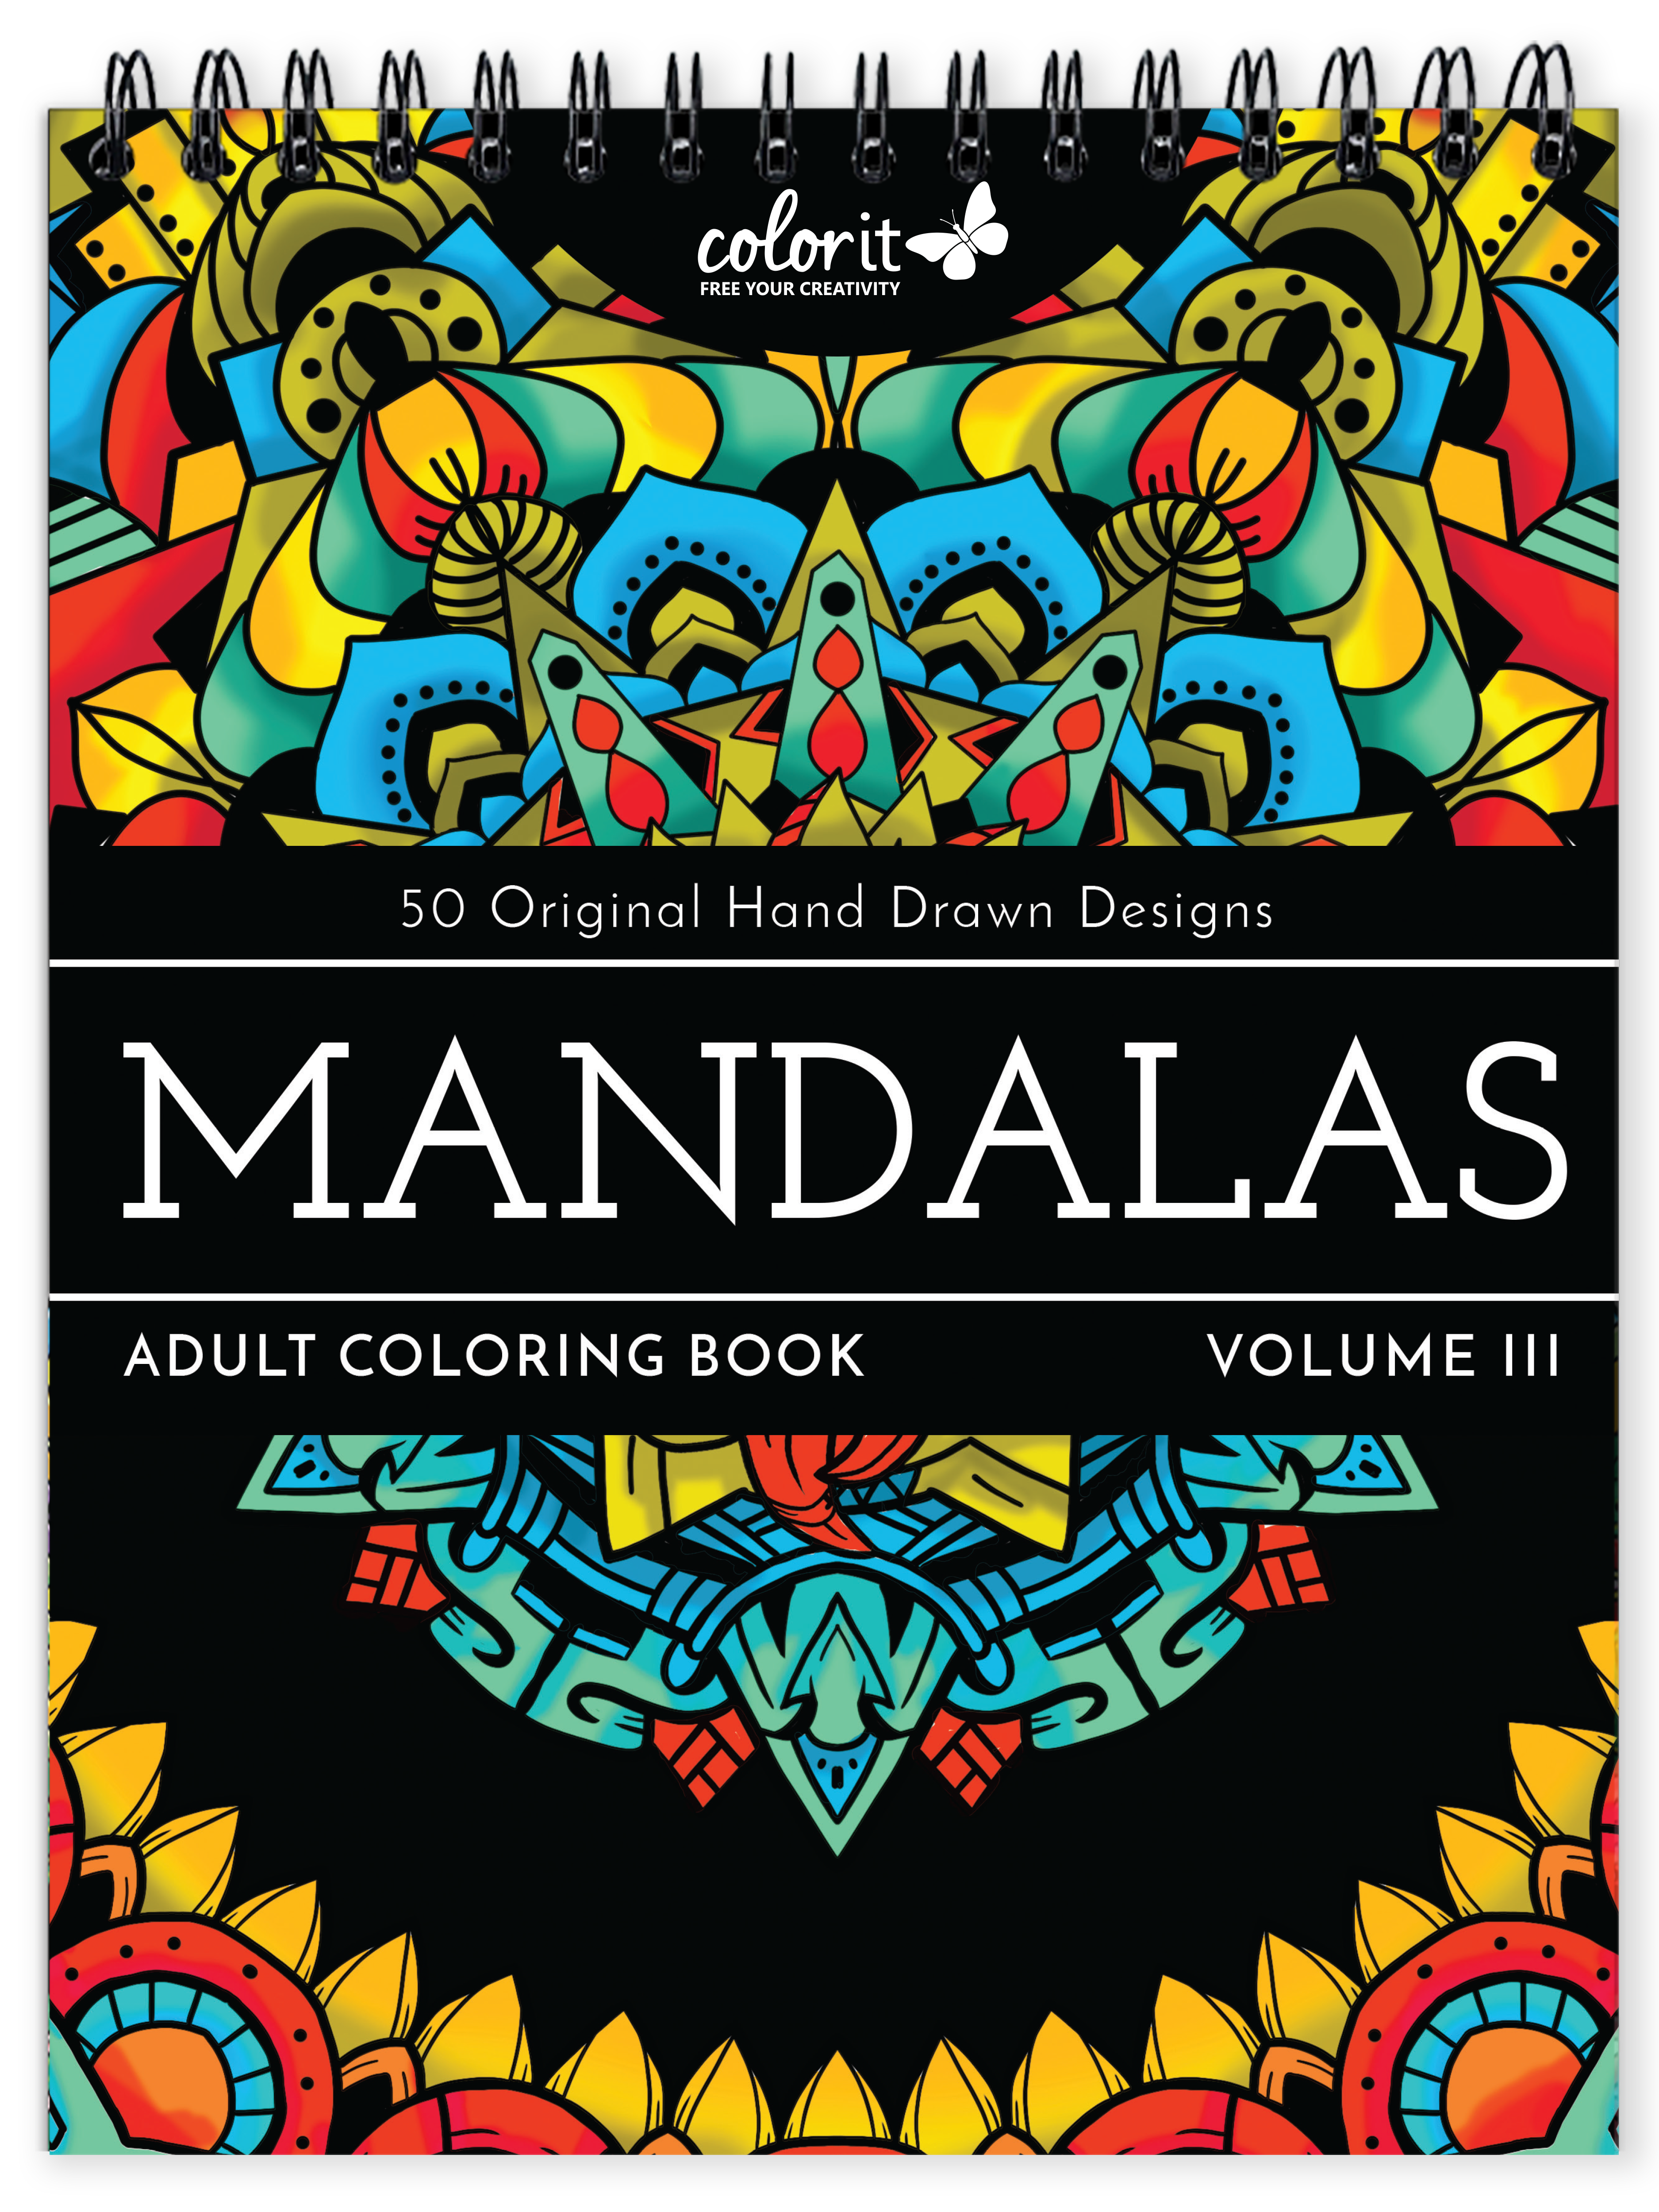 Mandala Coloring Book: Inspire Creativity, Reduce Stress, and Bring Balance  with 50 Mandala Coloring Pages (Paperback) 